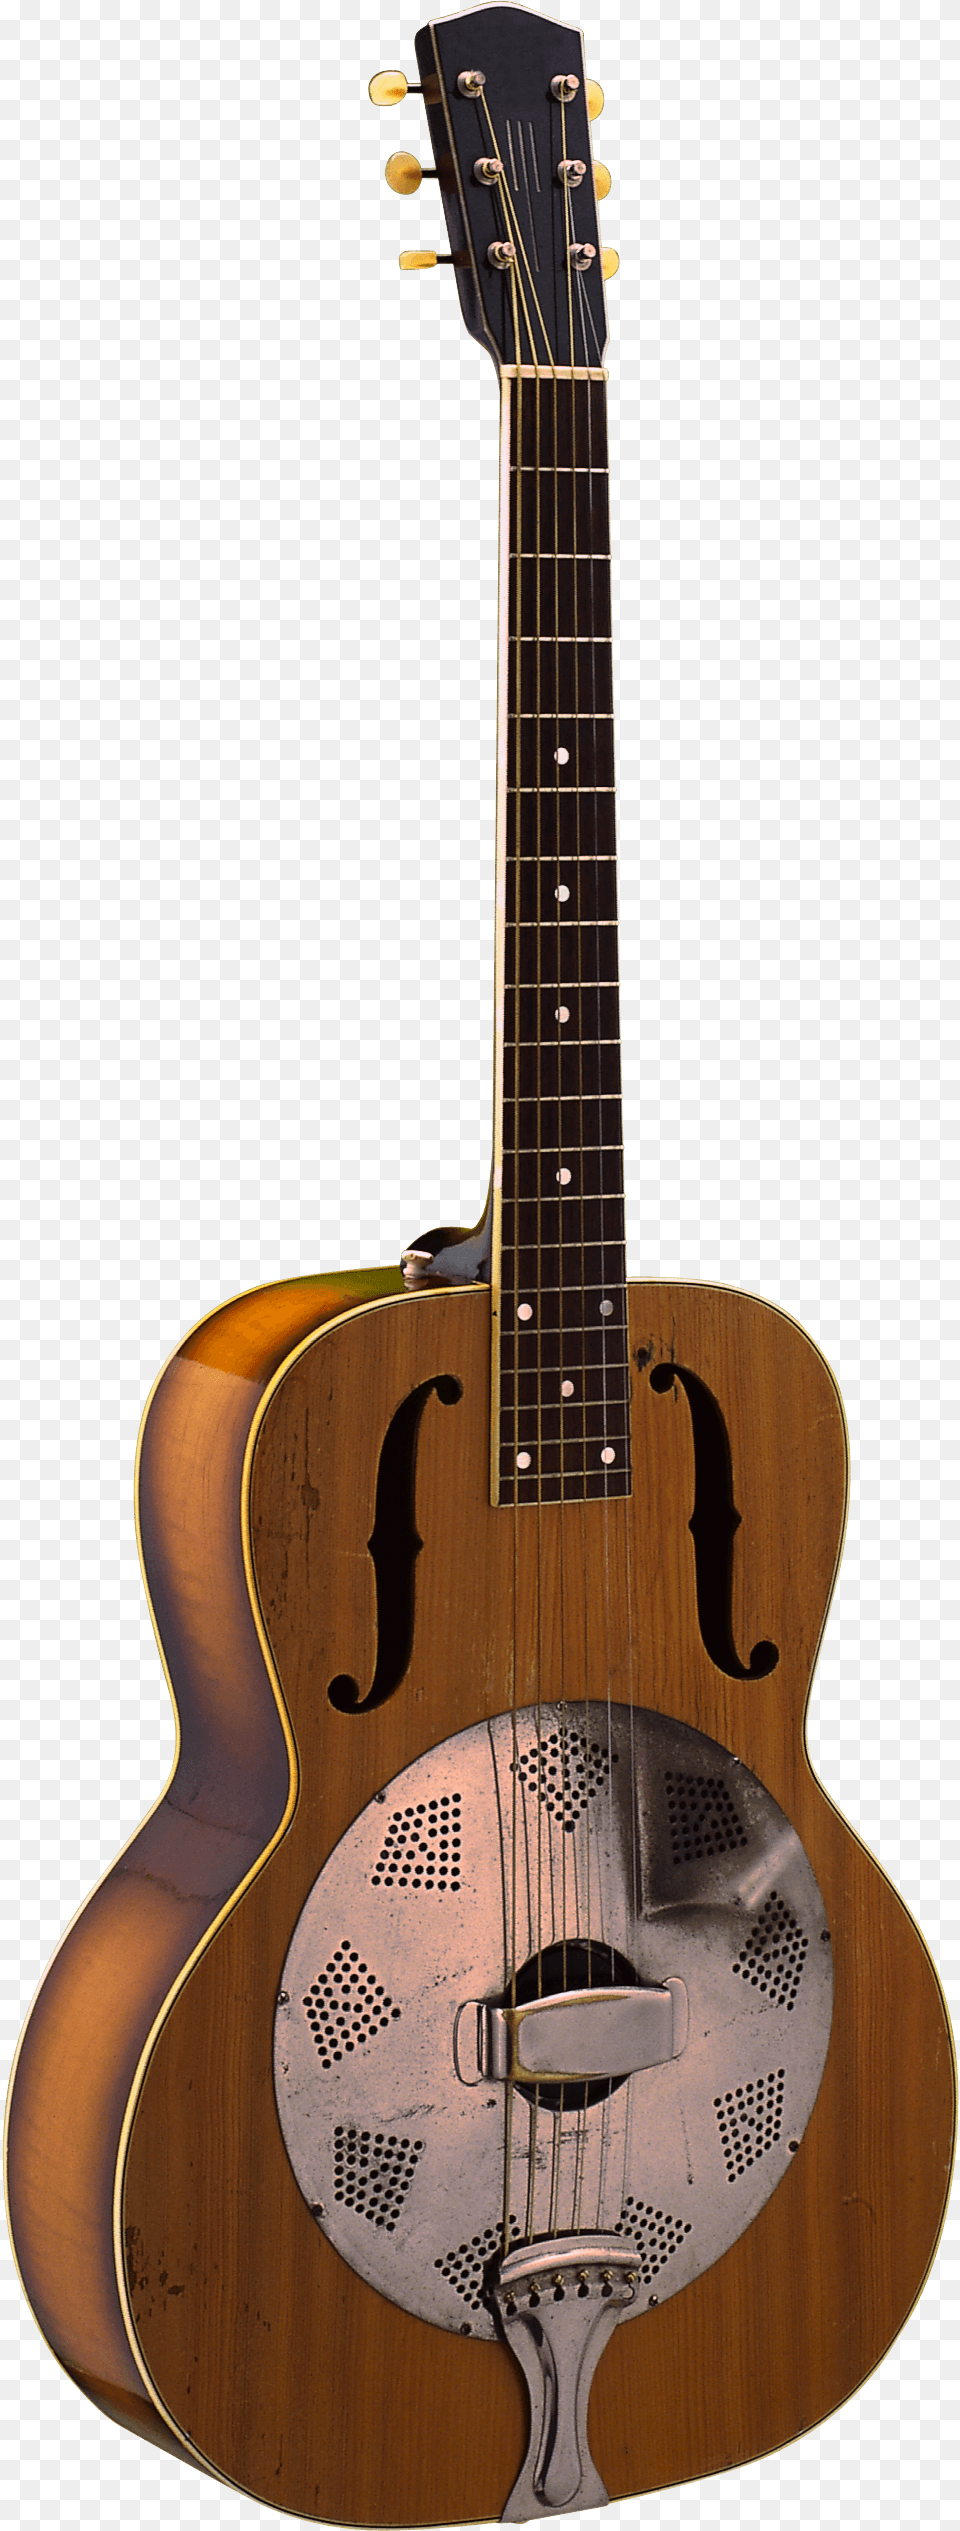 Guitar Image, Musical Instrument, Mandolin, Lute Free Transparent Png